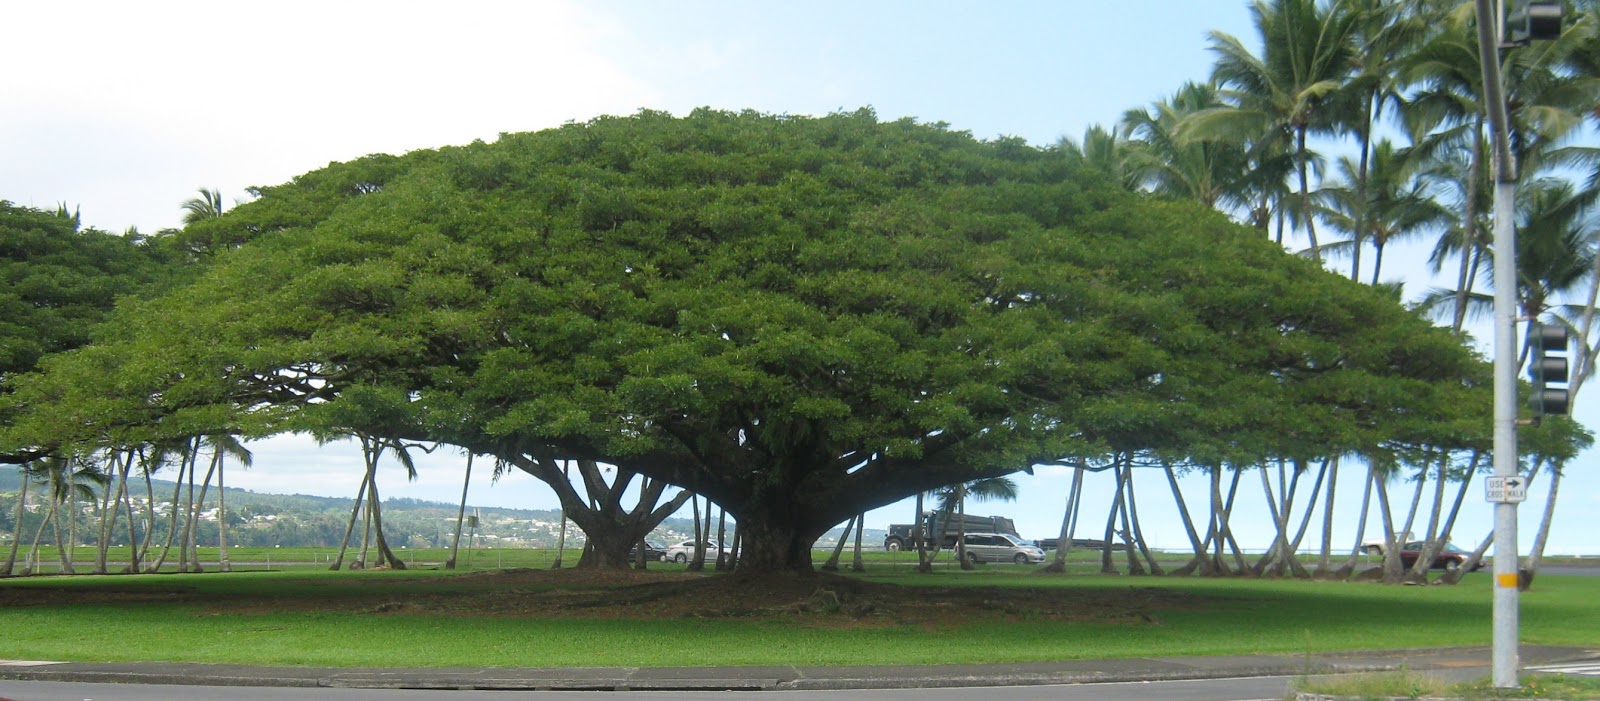 garden guy hawaii: why is a rain tree called a rain tree?